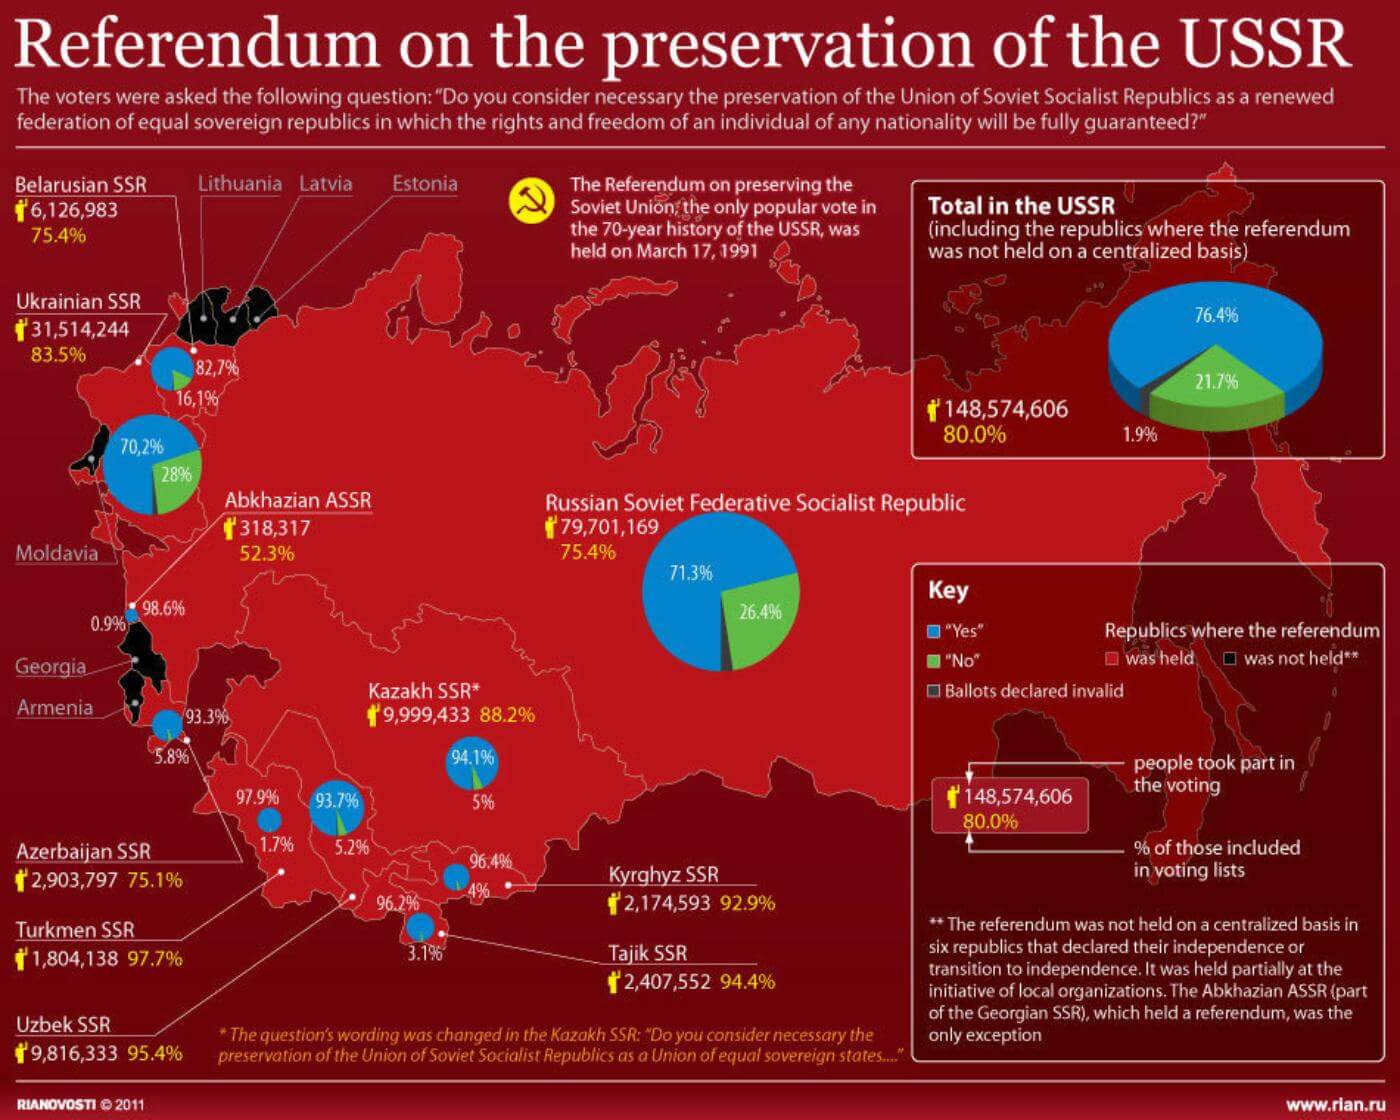 01-ria-novosti-infographic-referendum-on-the-preservation-of-the-ussr.jpg